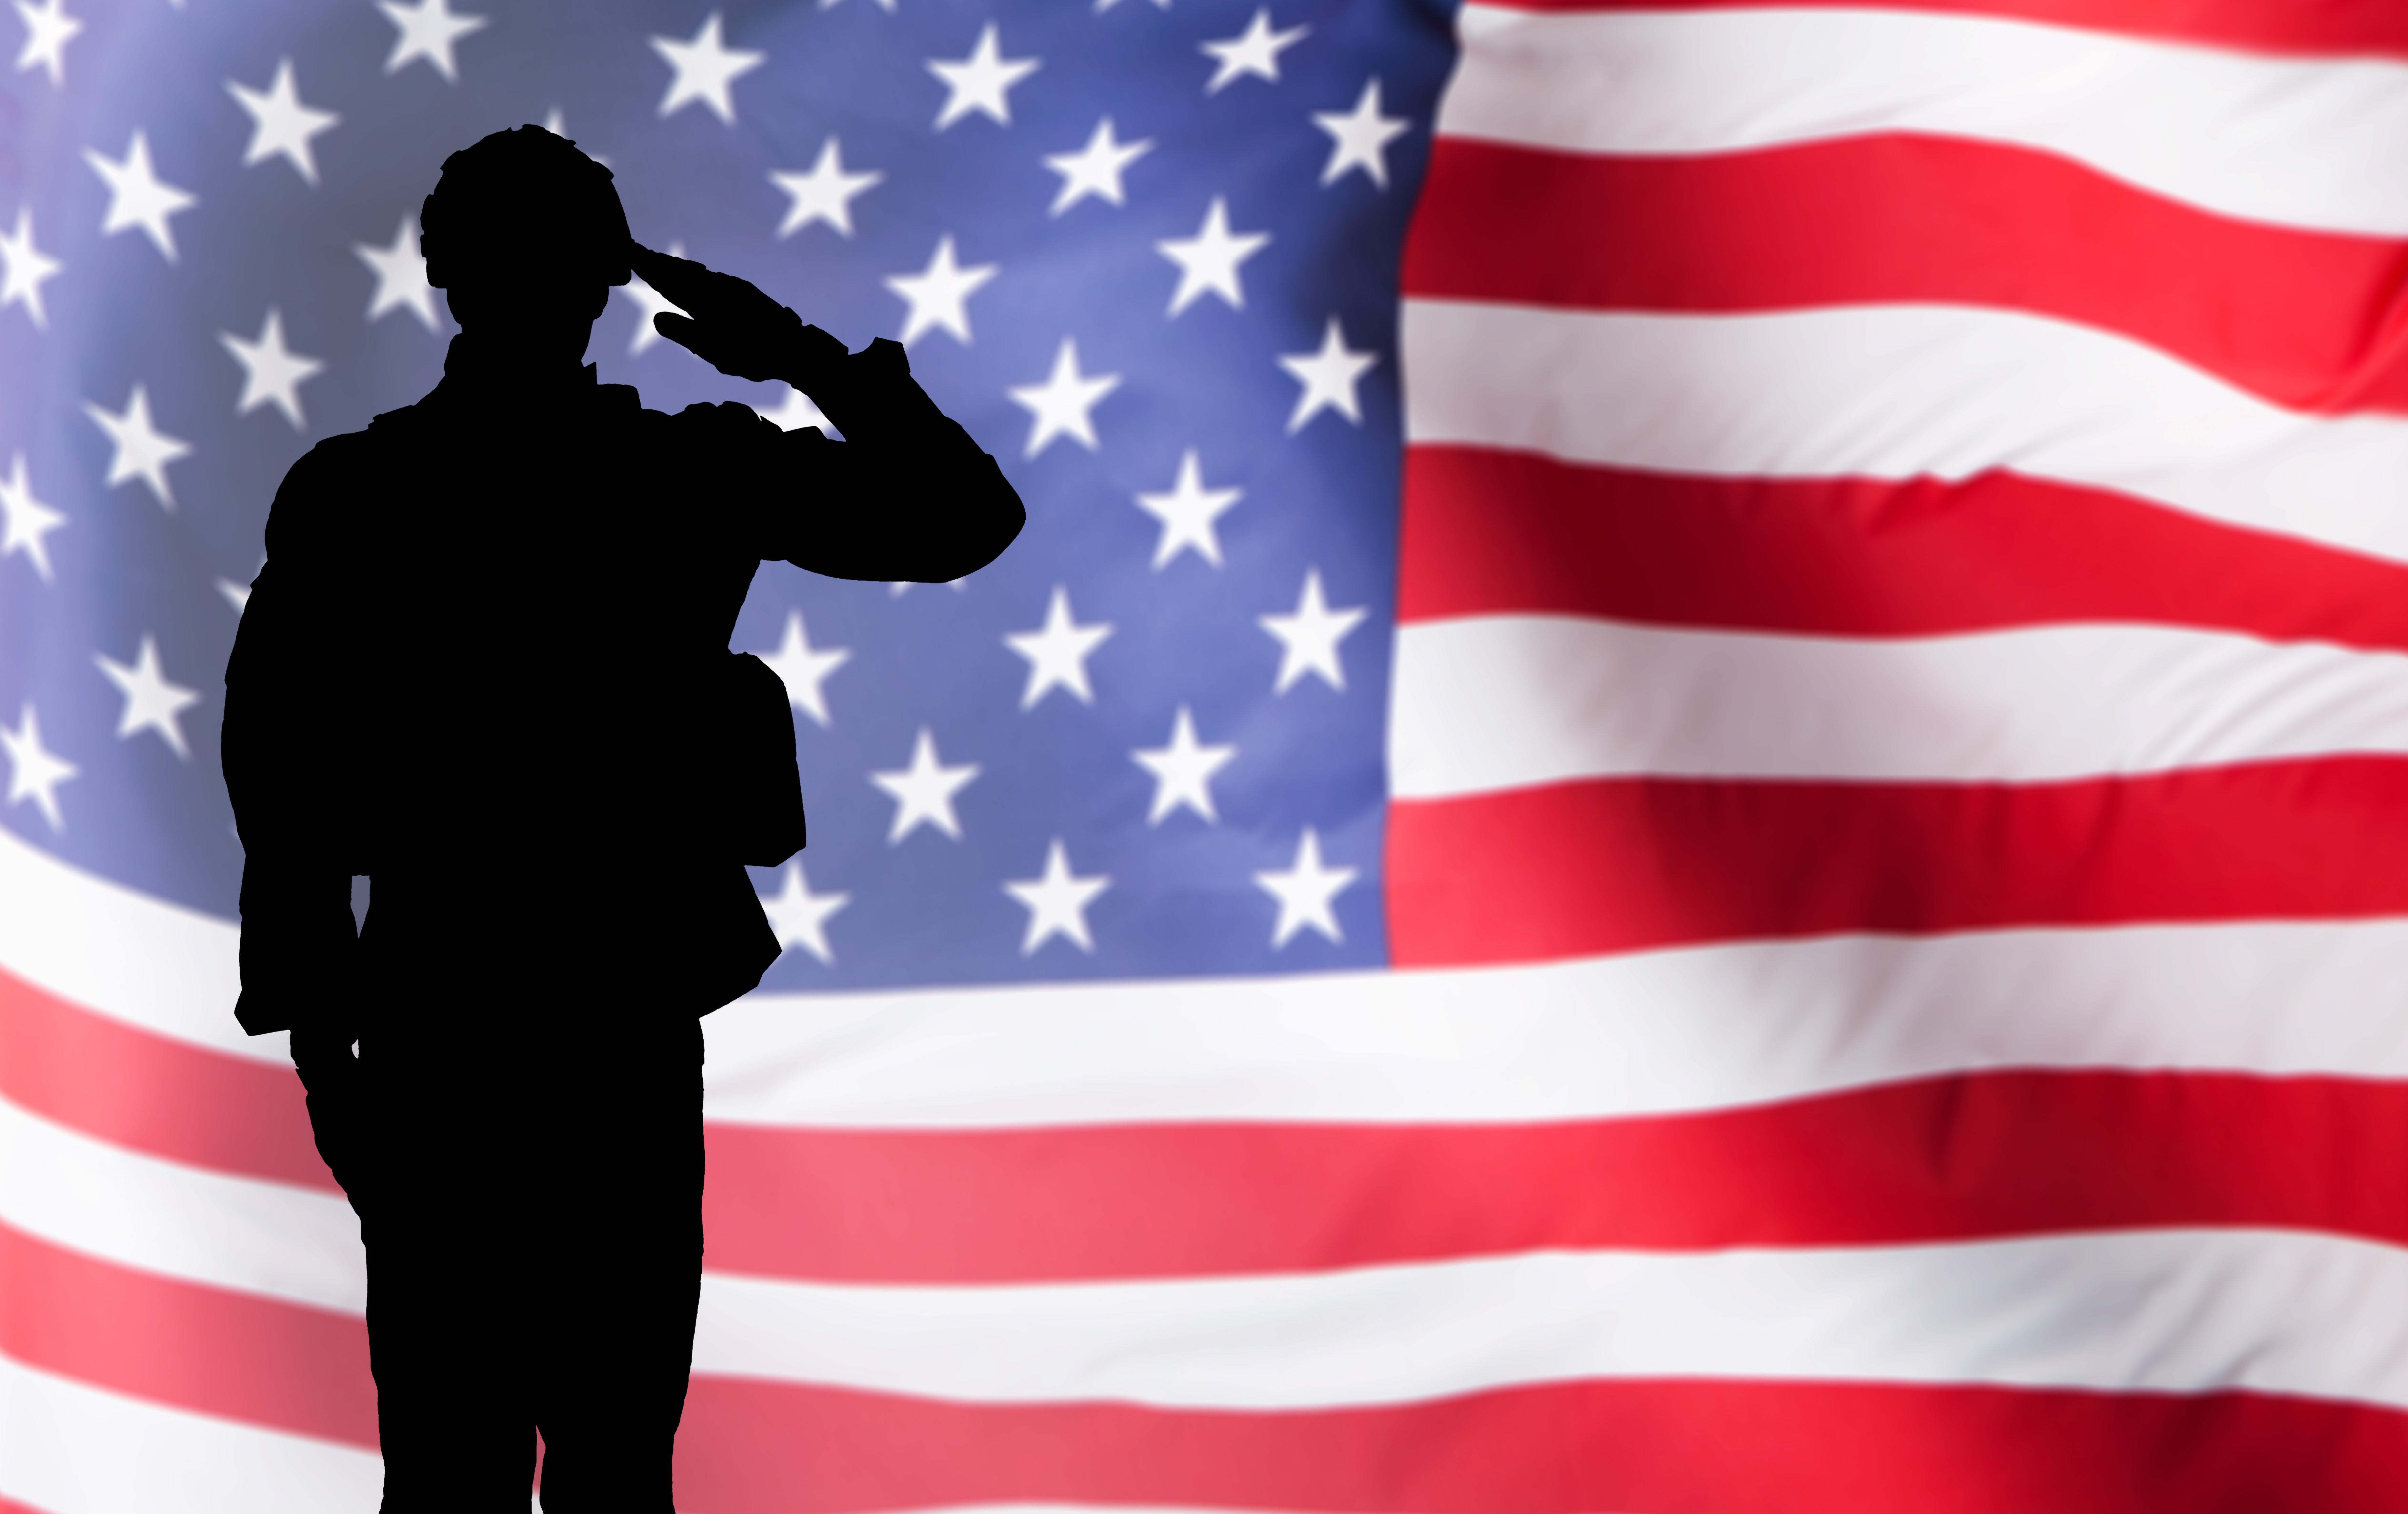 Honoring Our Veterans Virtual Job Fair This Wednesday